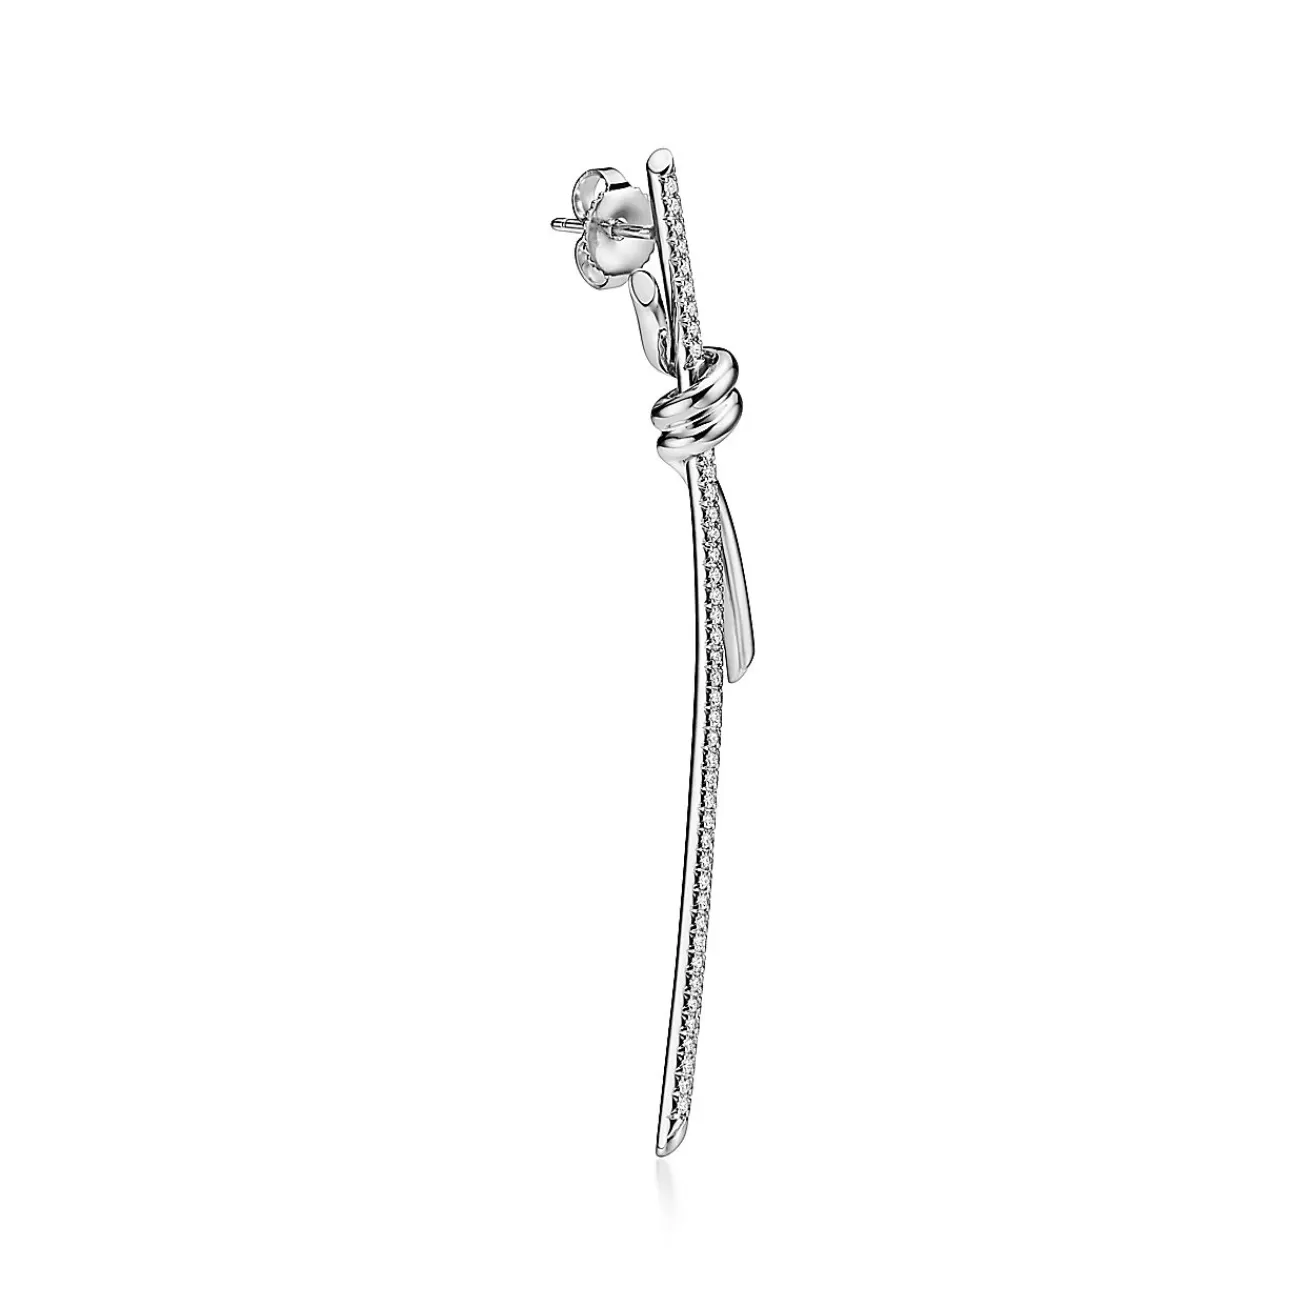 Tiffany & Co. Tiffany Knot Drop Earrings in White Gold with Diamonds | ^ Earrings | Diamond Jewelry